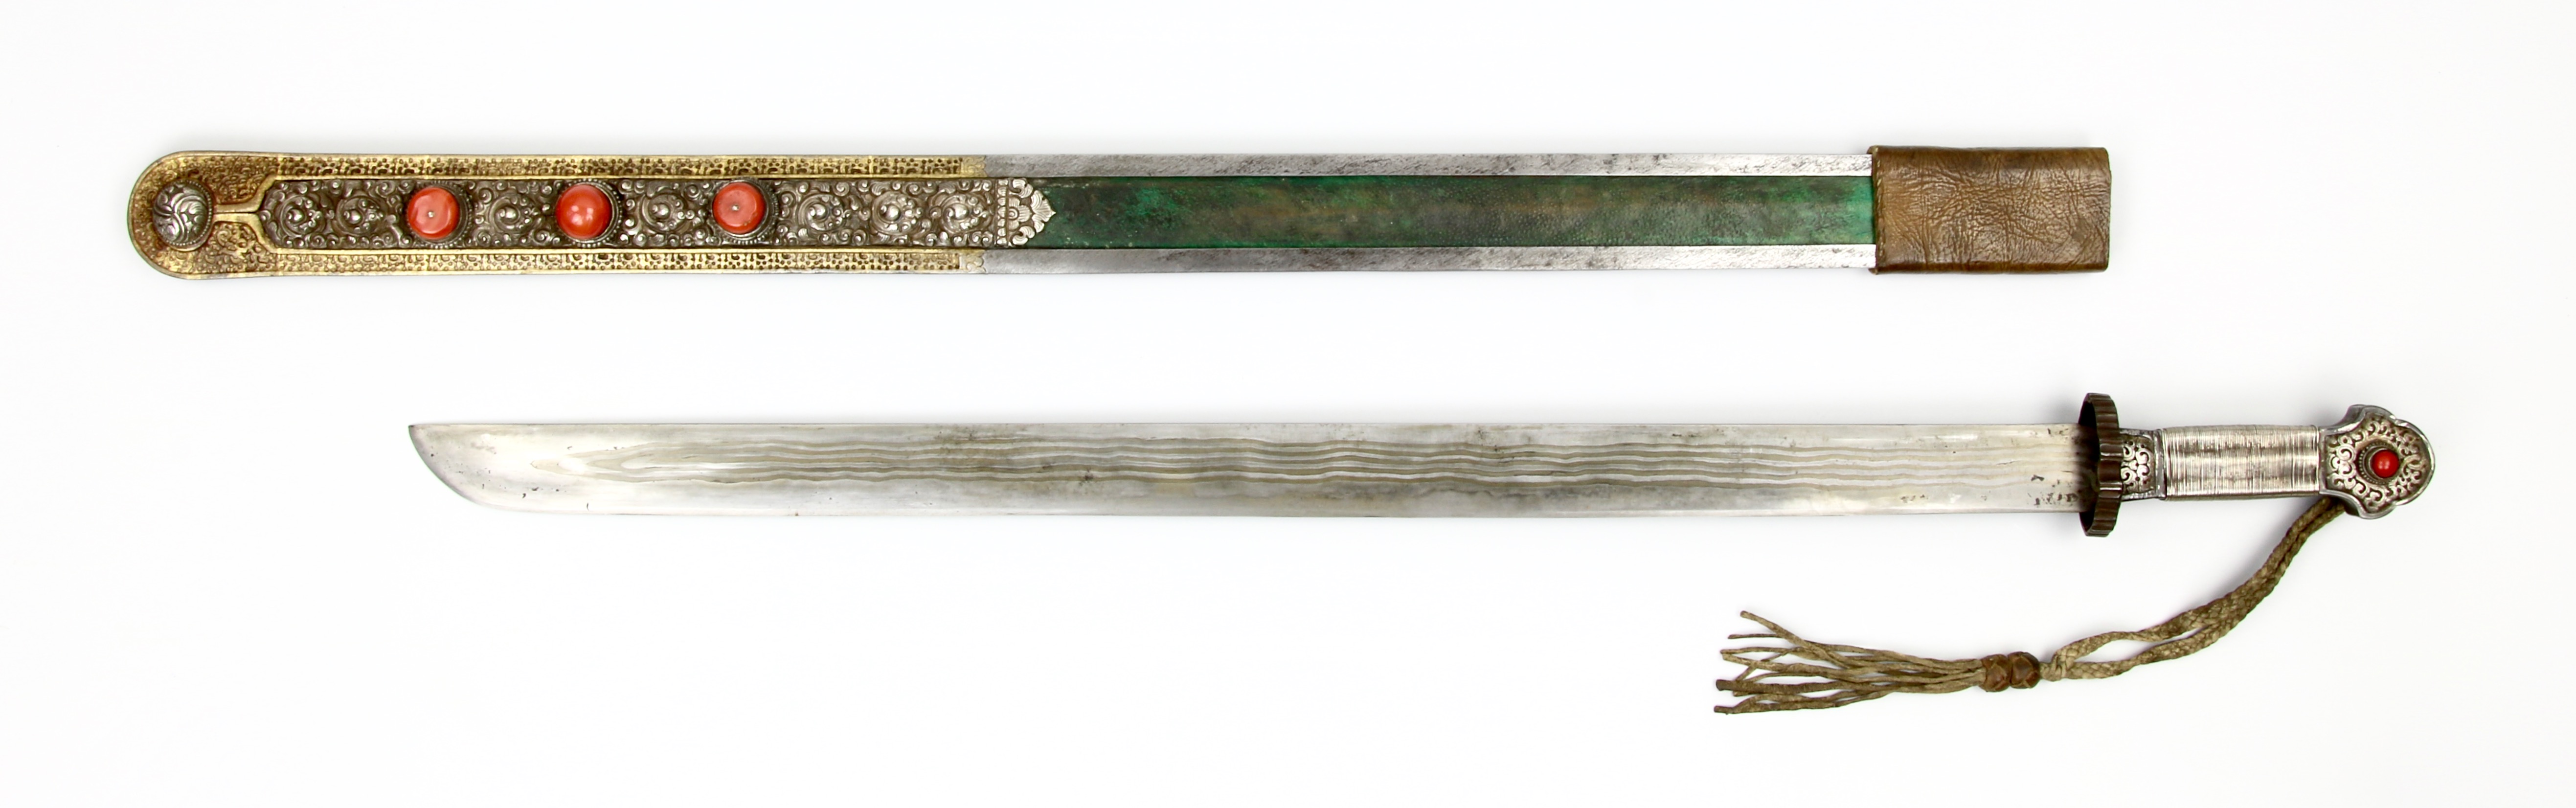 A Tibetan single edged sword, or dpa'dam